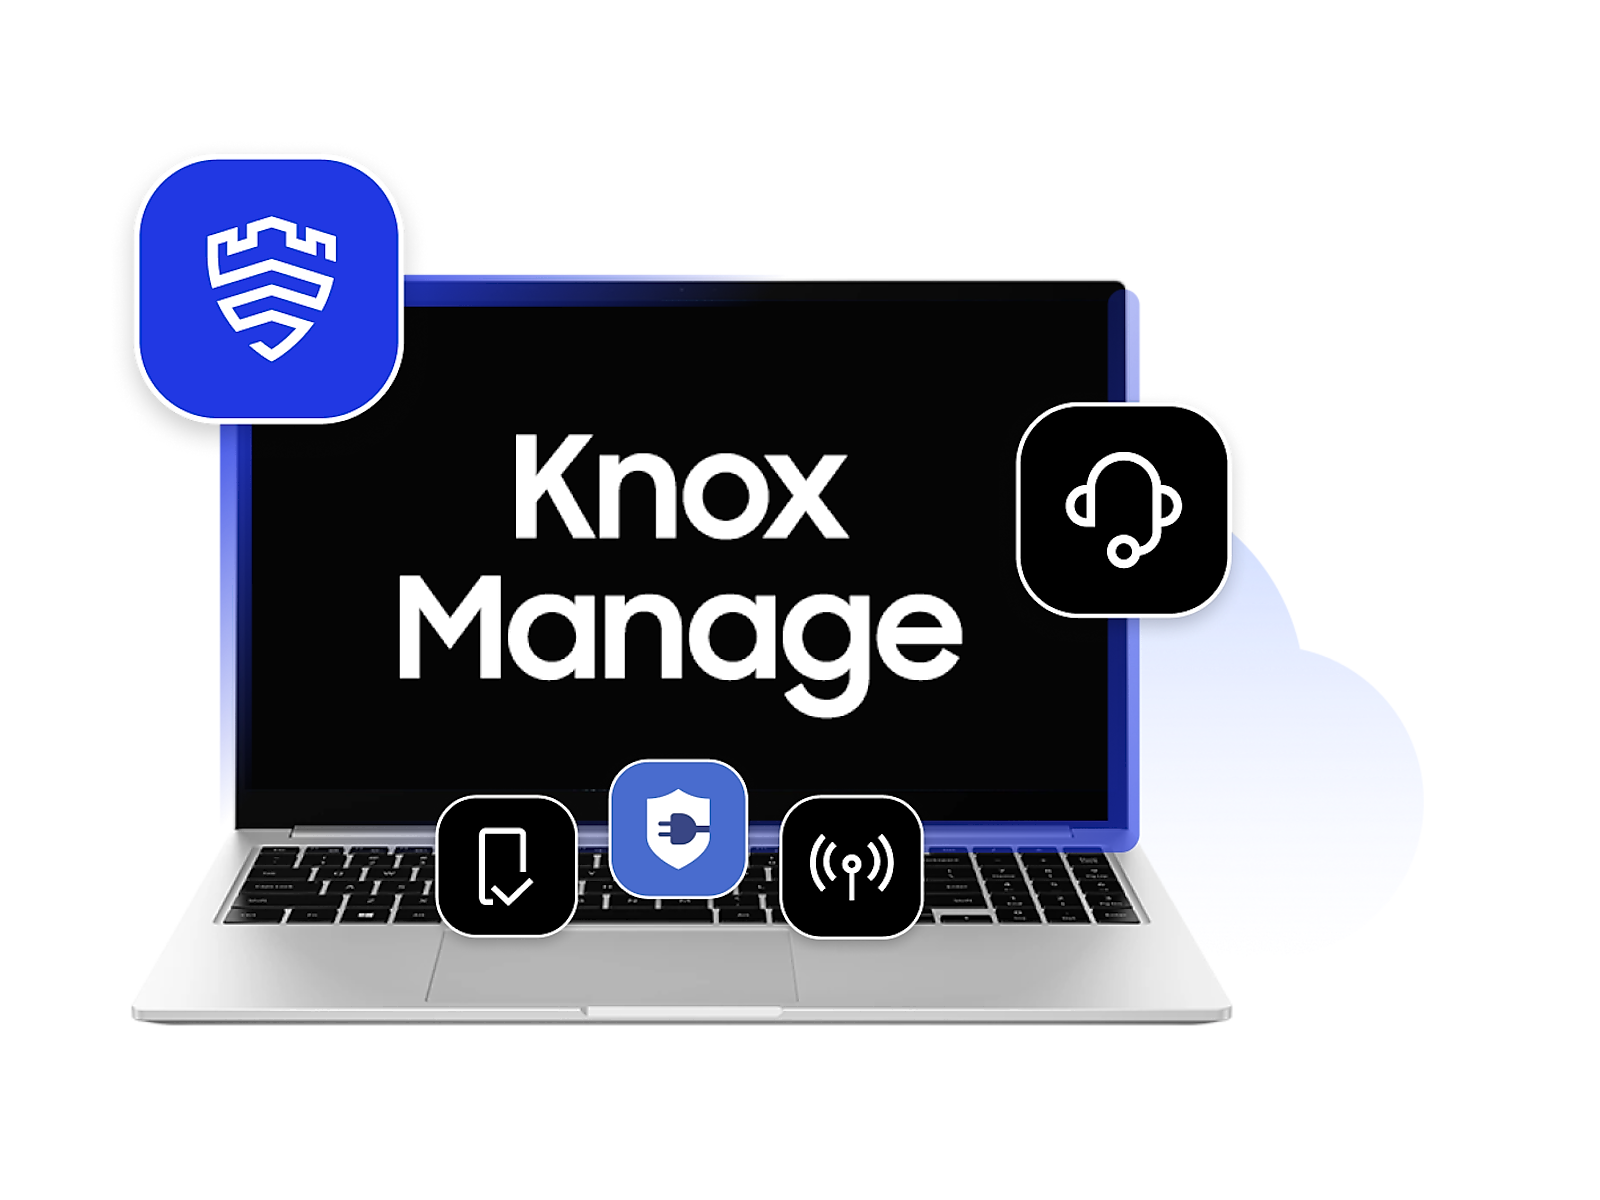 Samsung Knox Manage 2 Year License